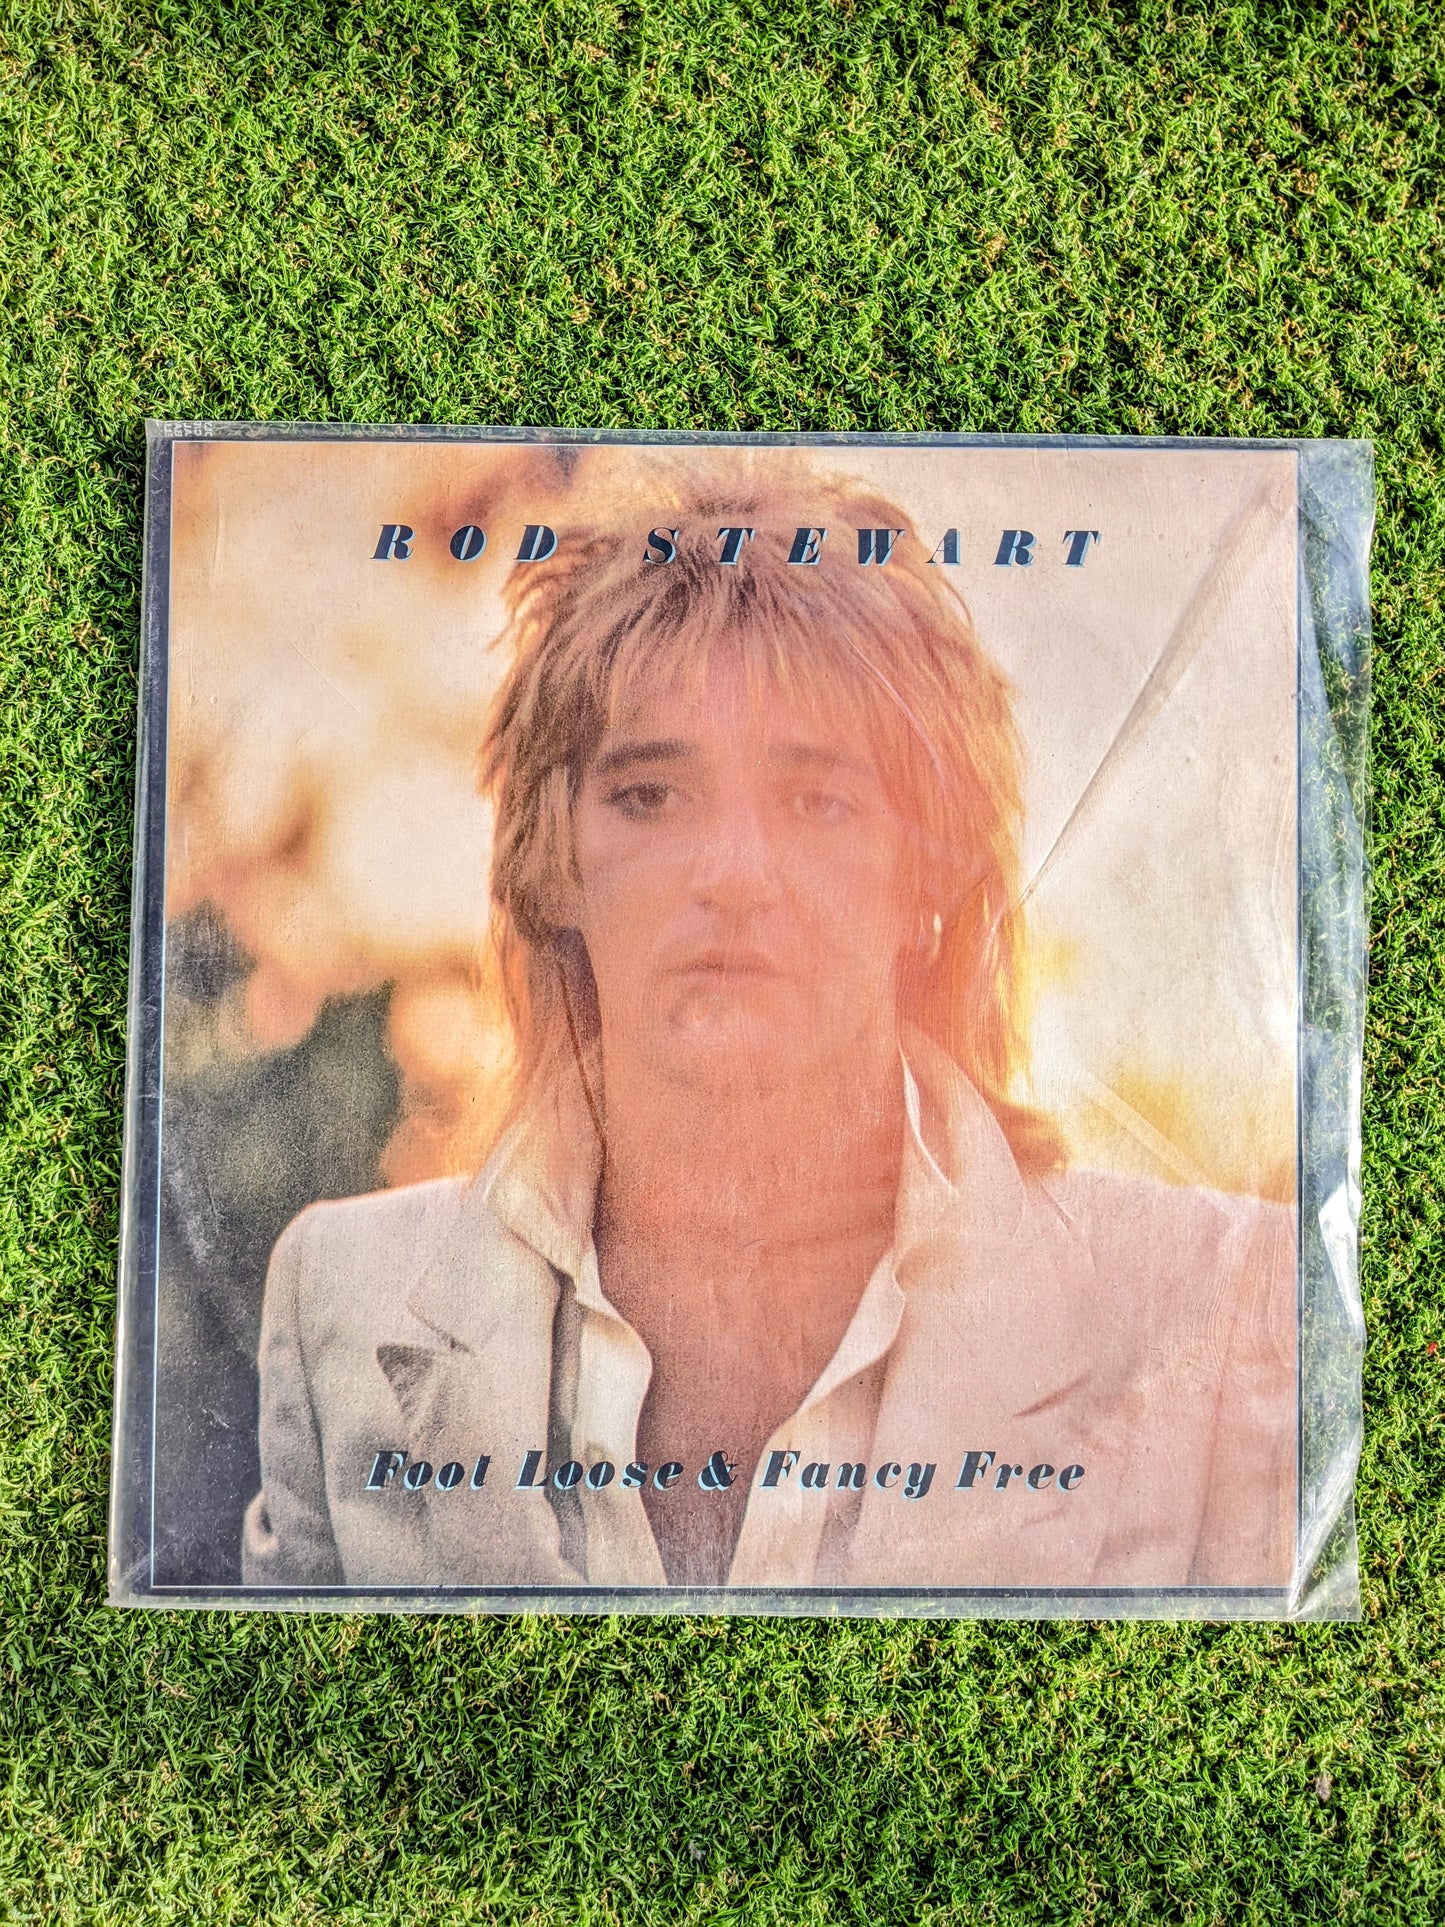 Rod Stewart Vinyl Record